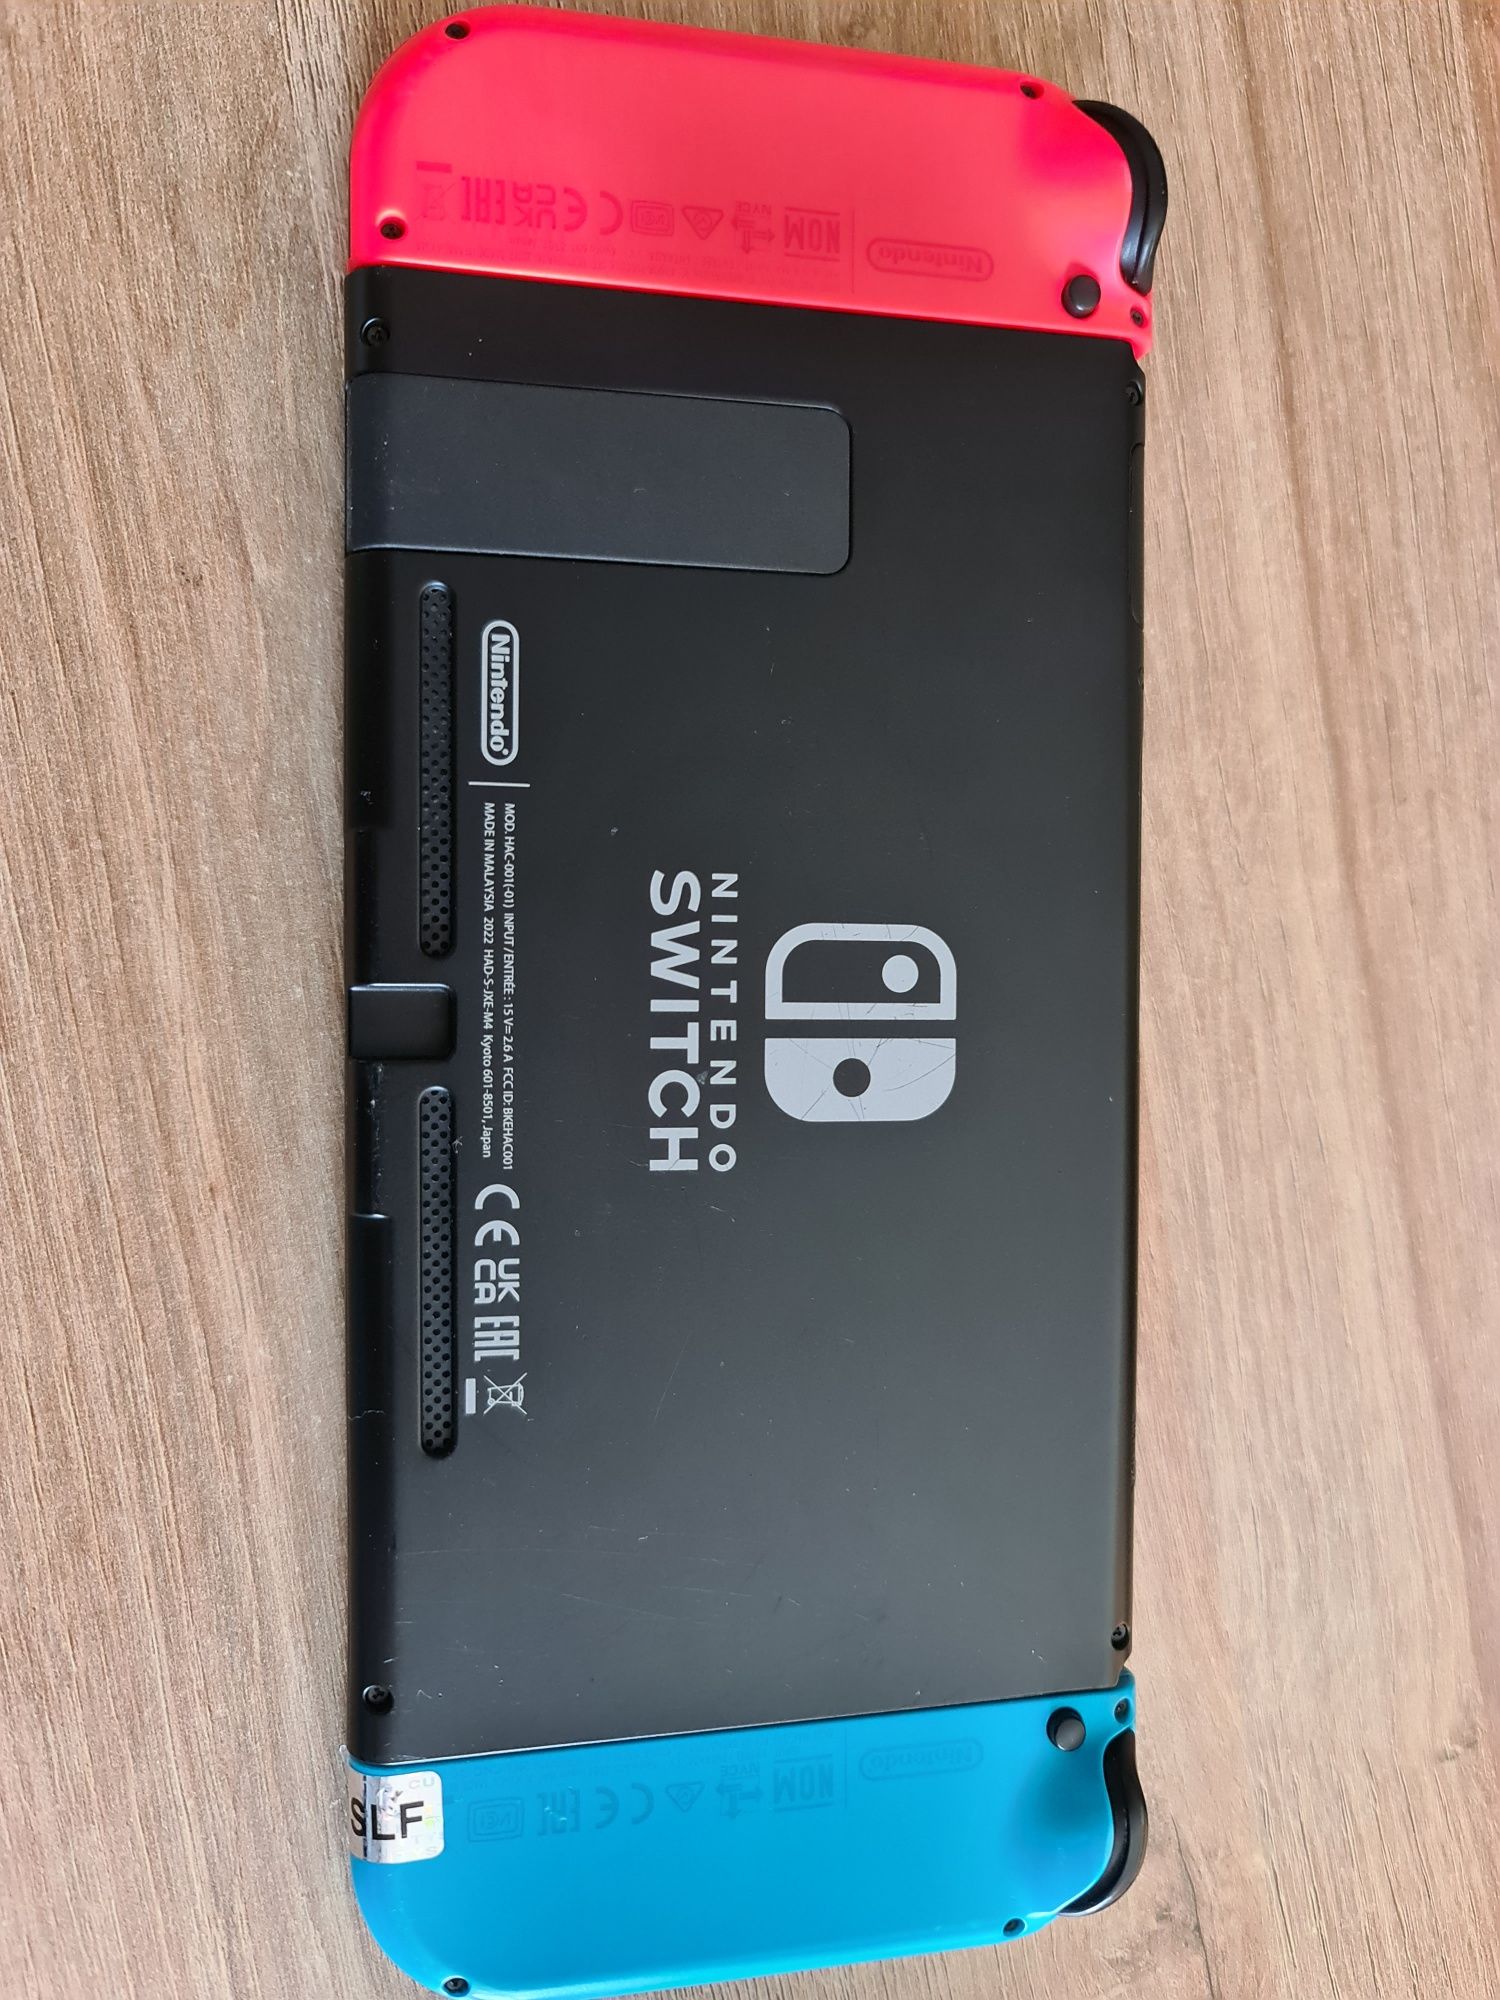 Nintendo  Switch